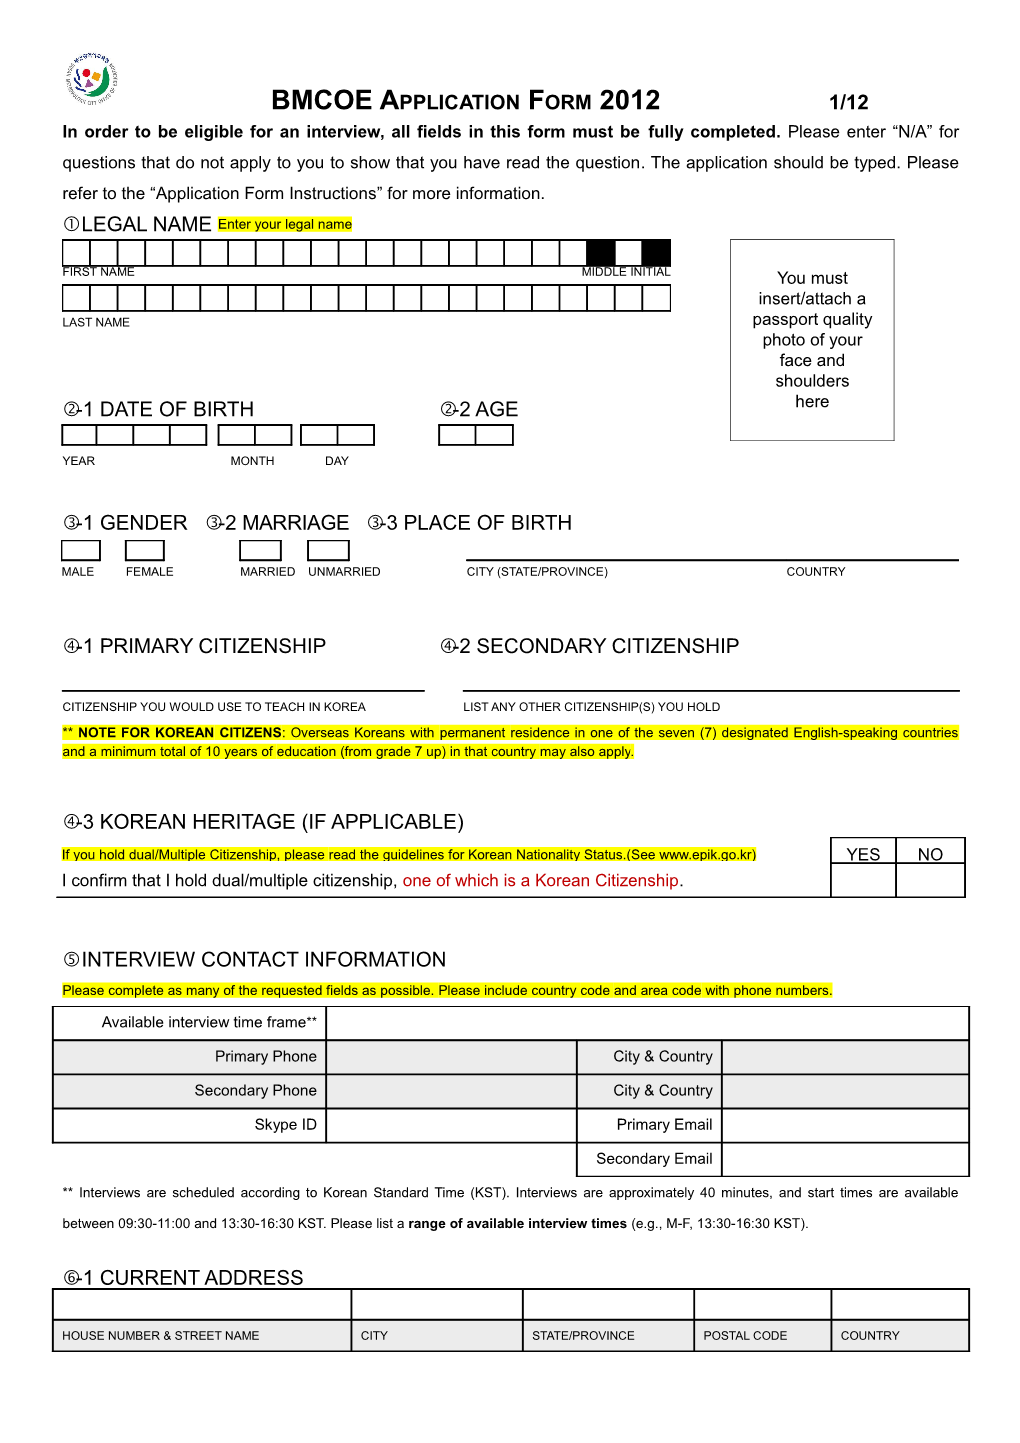 BMCOE Application Form 20121/8